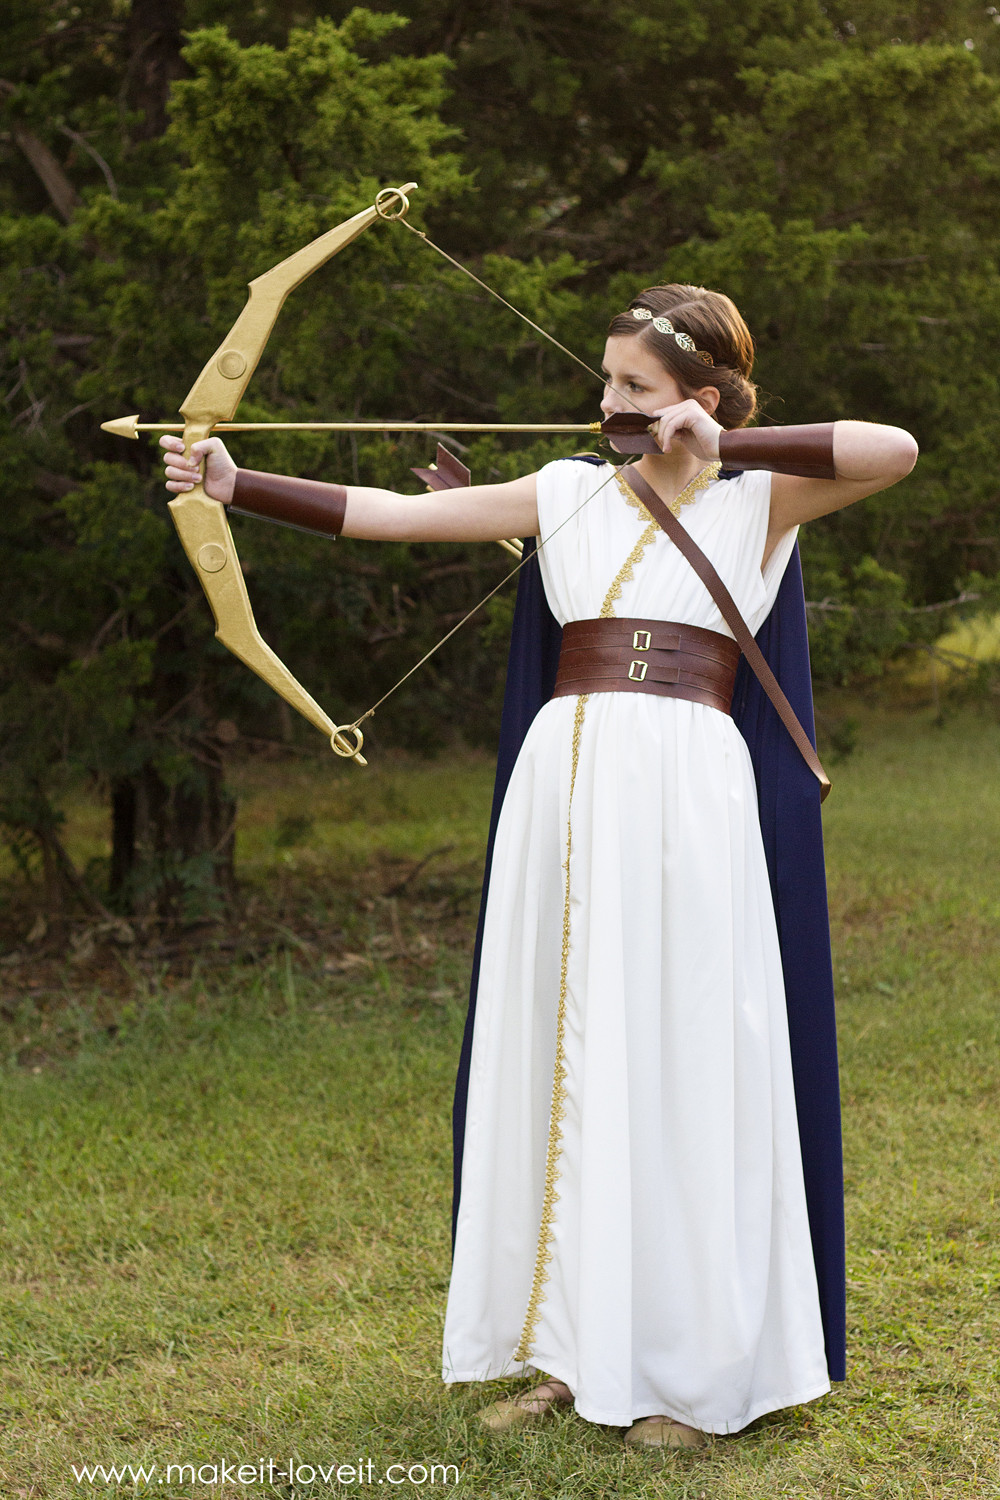 Best ideas about Greek Goddess DIY Costume
. Save or Pin DIY Greek Goddess Costume ARTEMIS Now.